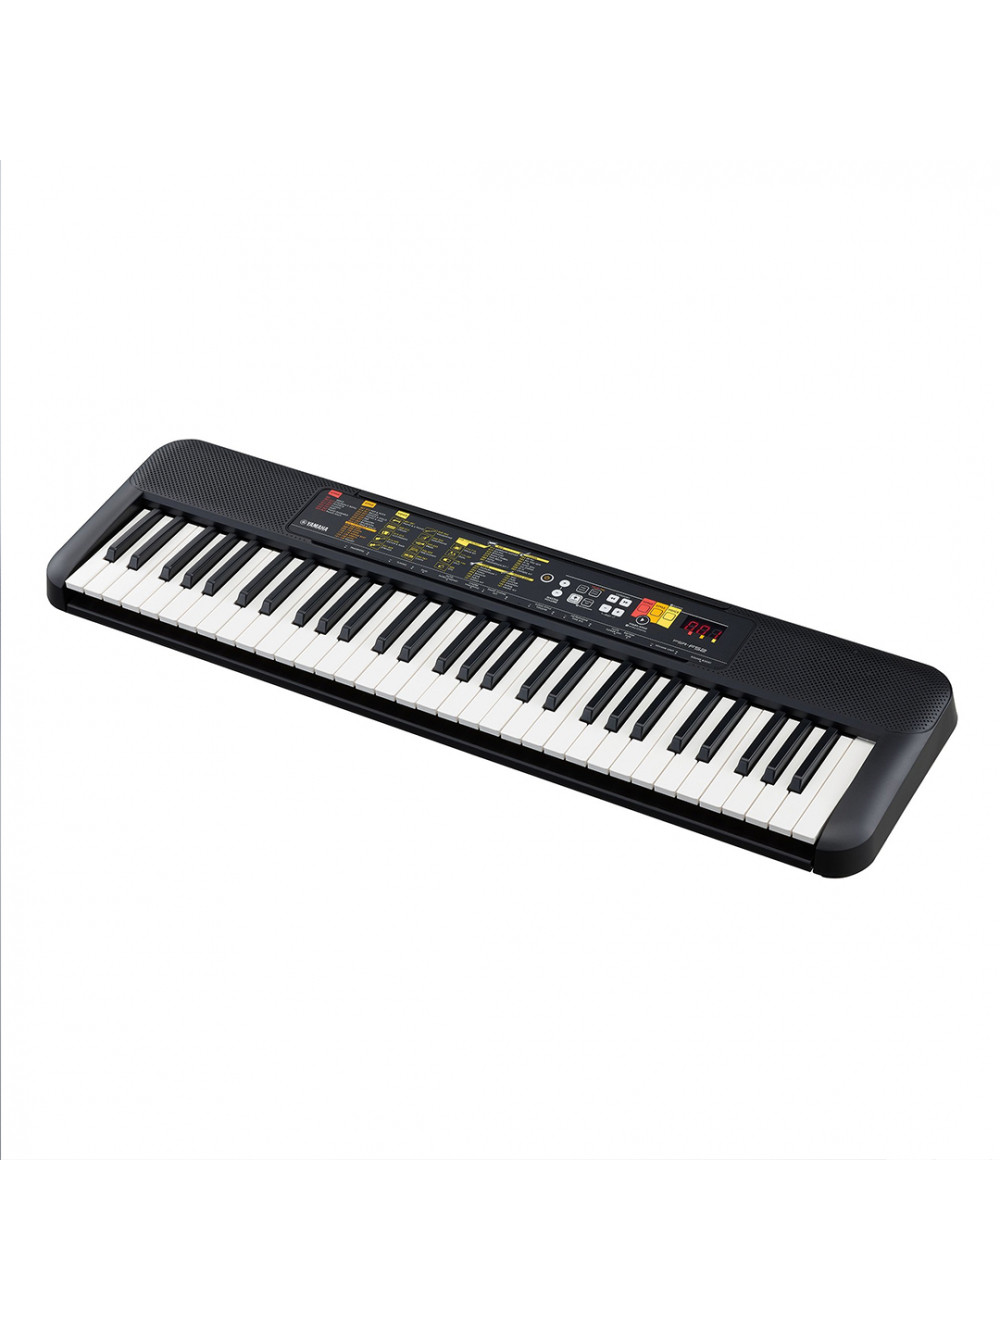 Yamaha PSR F52 Portable Keyboard with 61 Keys